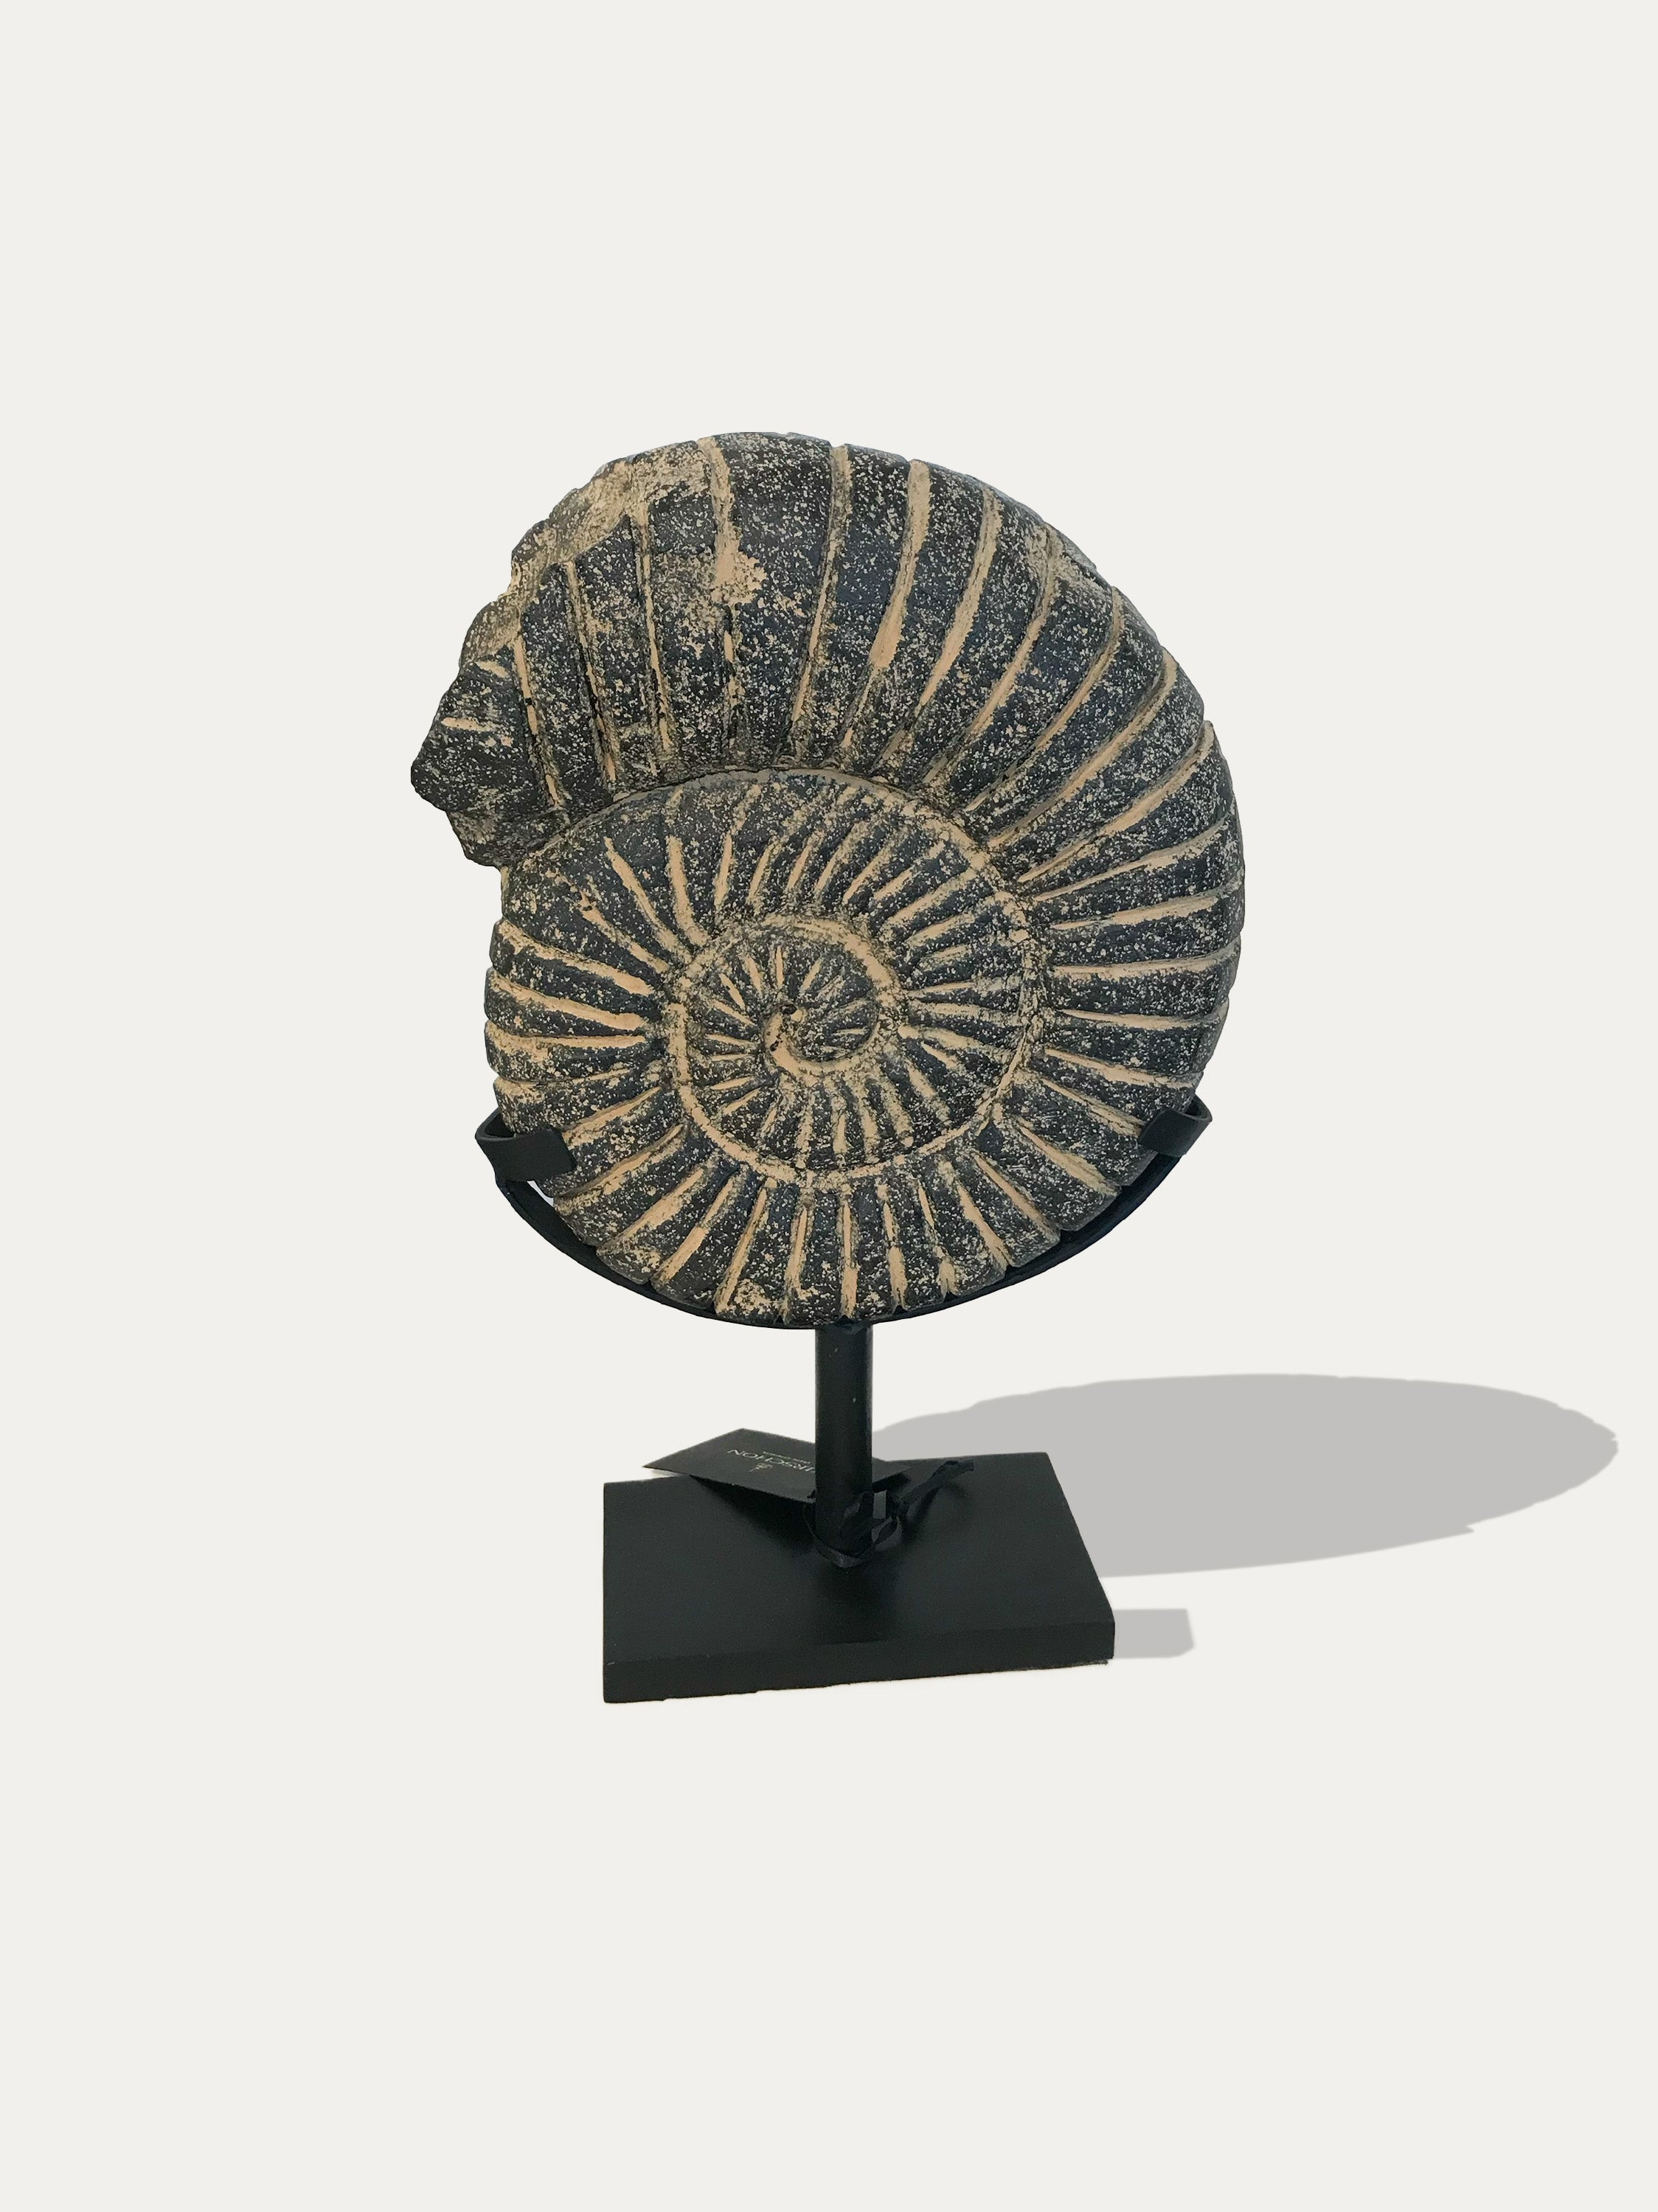 Black Ammonite stone statue from Java - Asian art from Kirschon